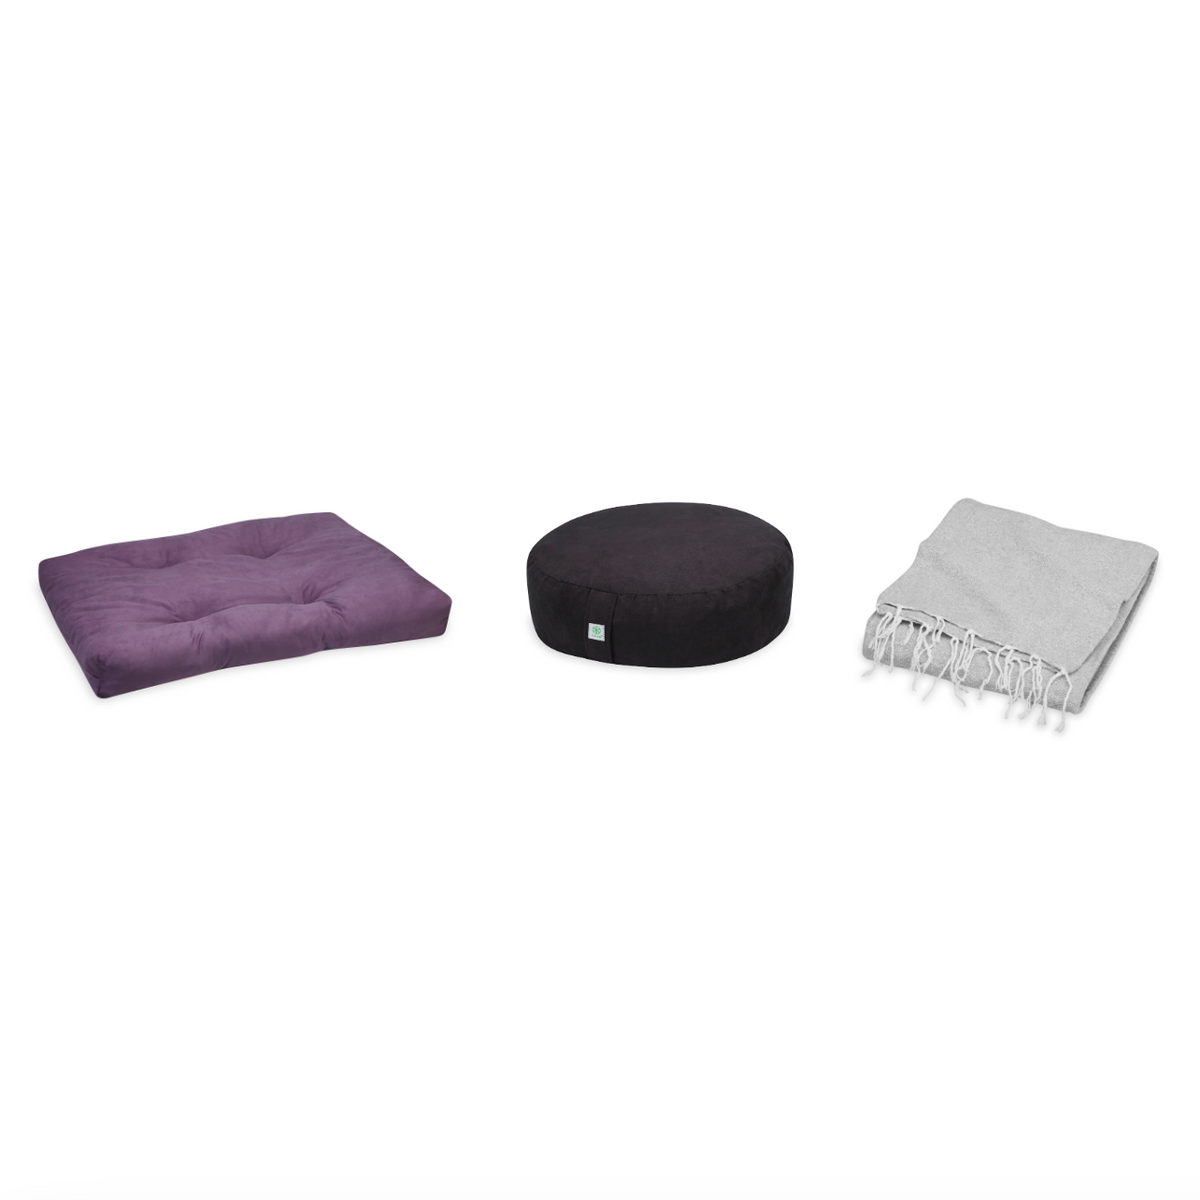 Meditation Bundle - Zabuton (Purple), Zafu (Black), Blanket (Grey)